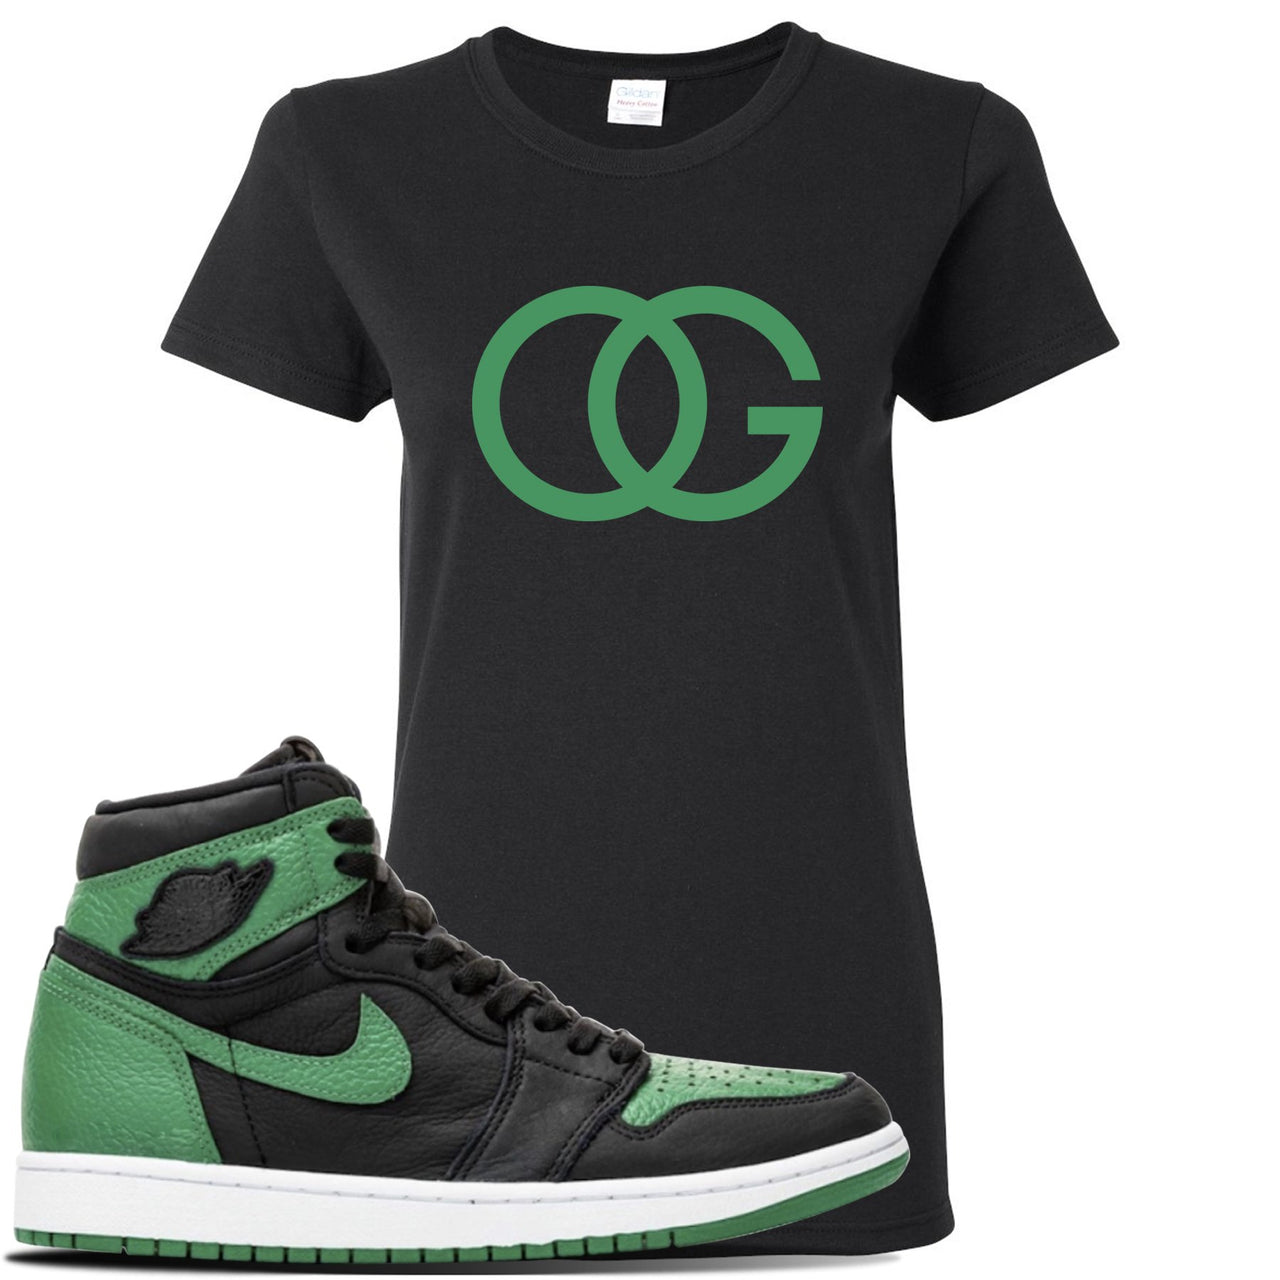 Jordan 1 Retro High OG Pine Green Gym Sneaker Black Women's T Shirt | Women's Tees to match Air Jordan 1 Retro High OG Pine Green Gym Shoes | OG